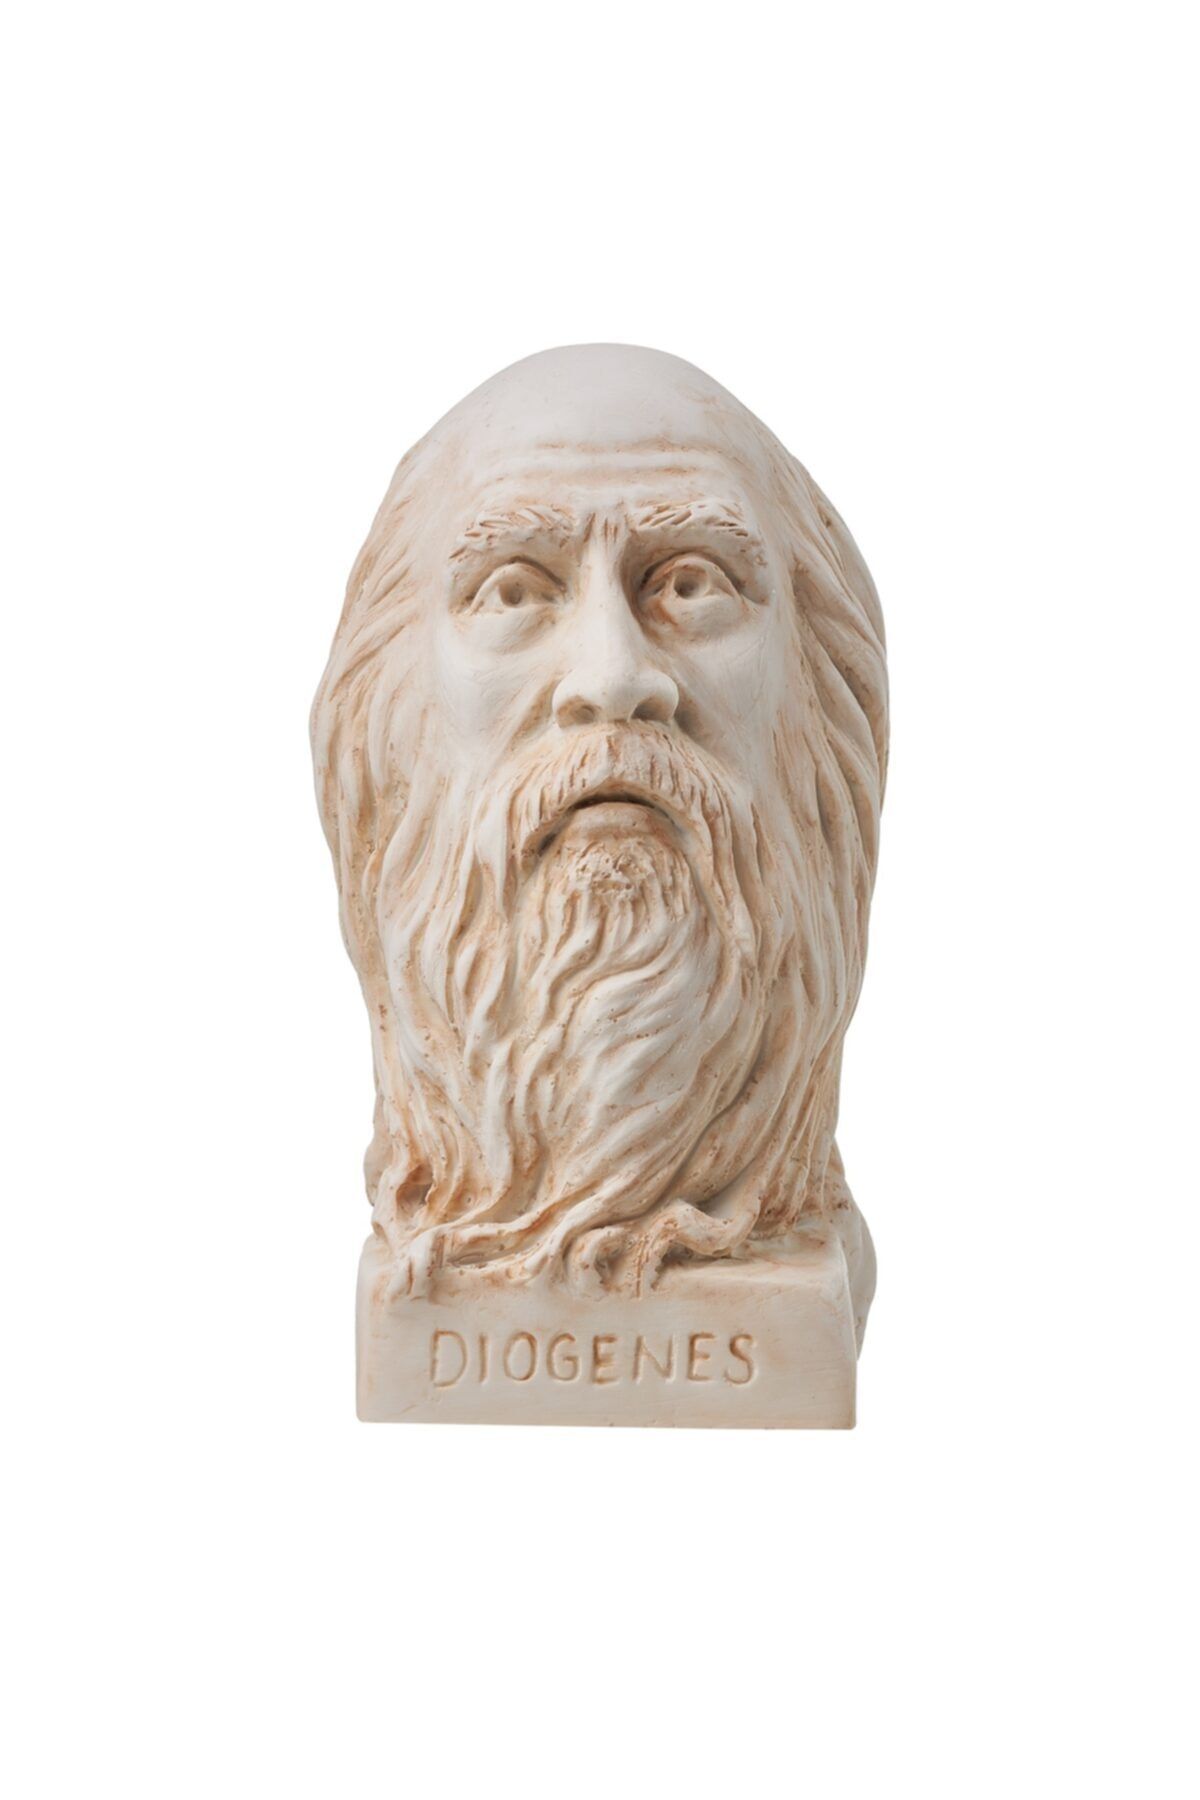 MÜZEDENAL Heykel Diogenes 15 X 8 X 9 Cm